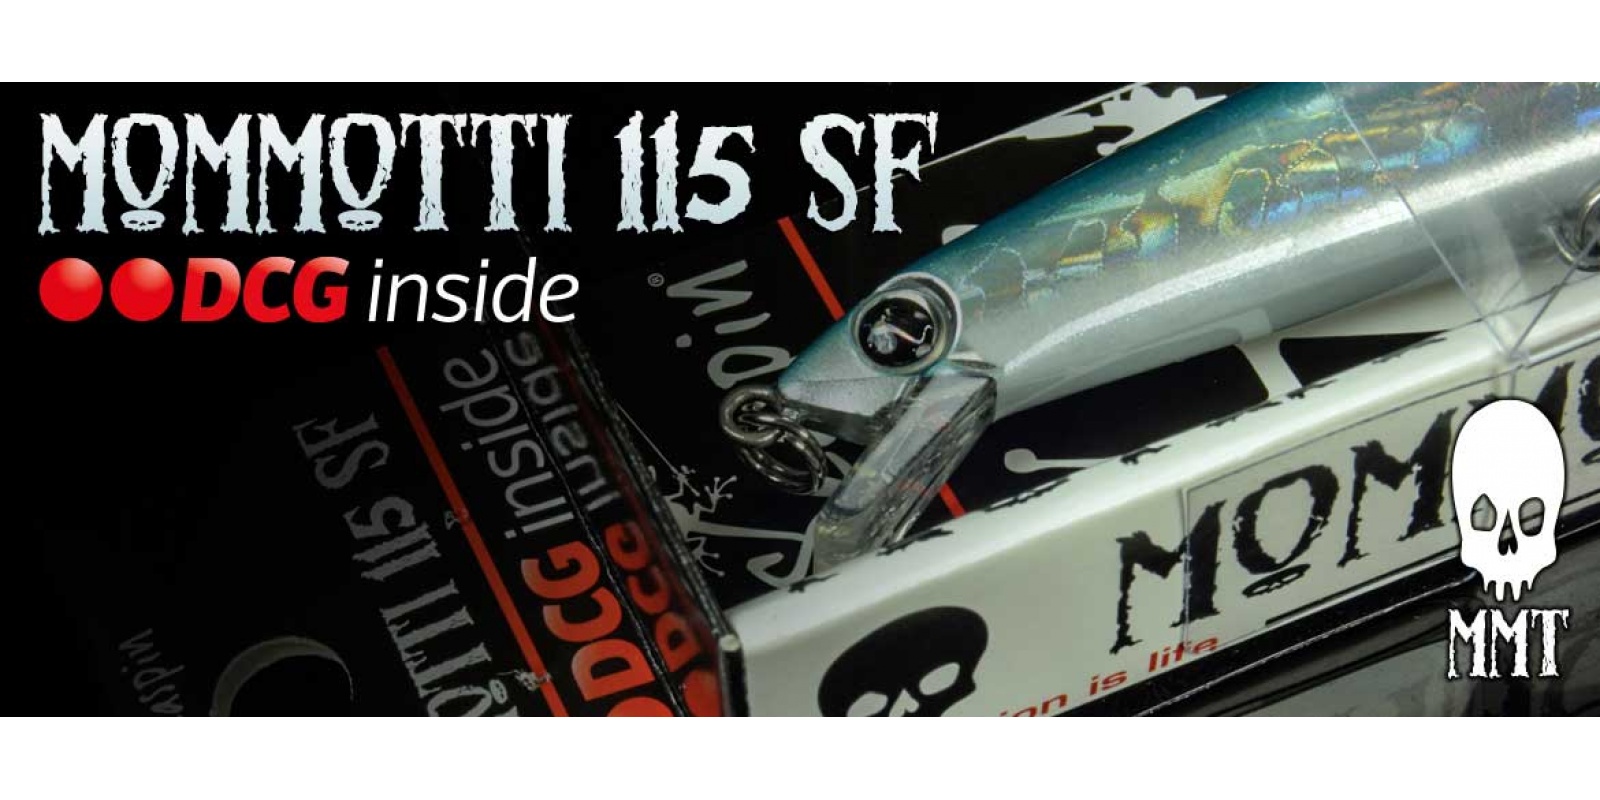 Mommotti 115 SF Seaspin : la technologie DCG ! 